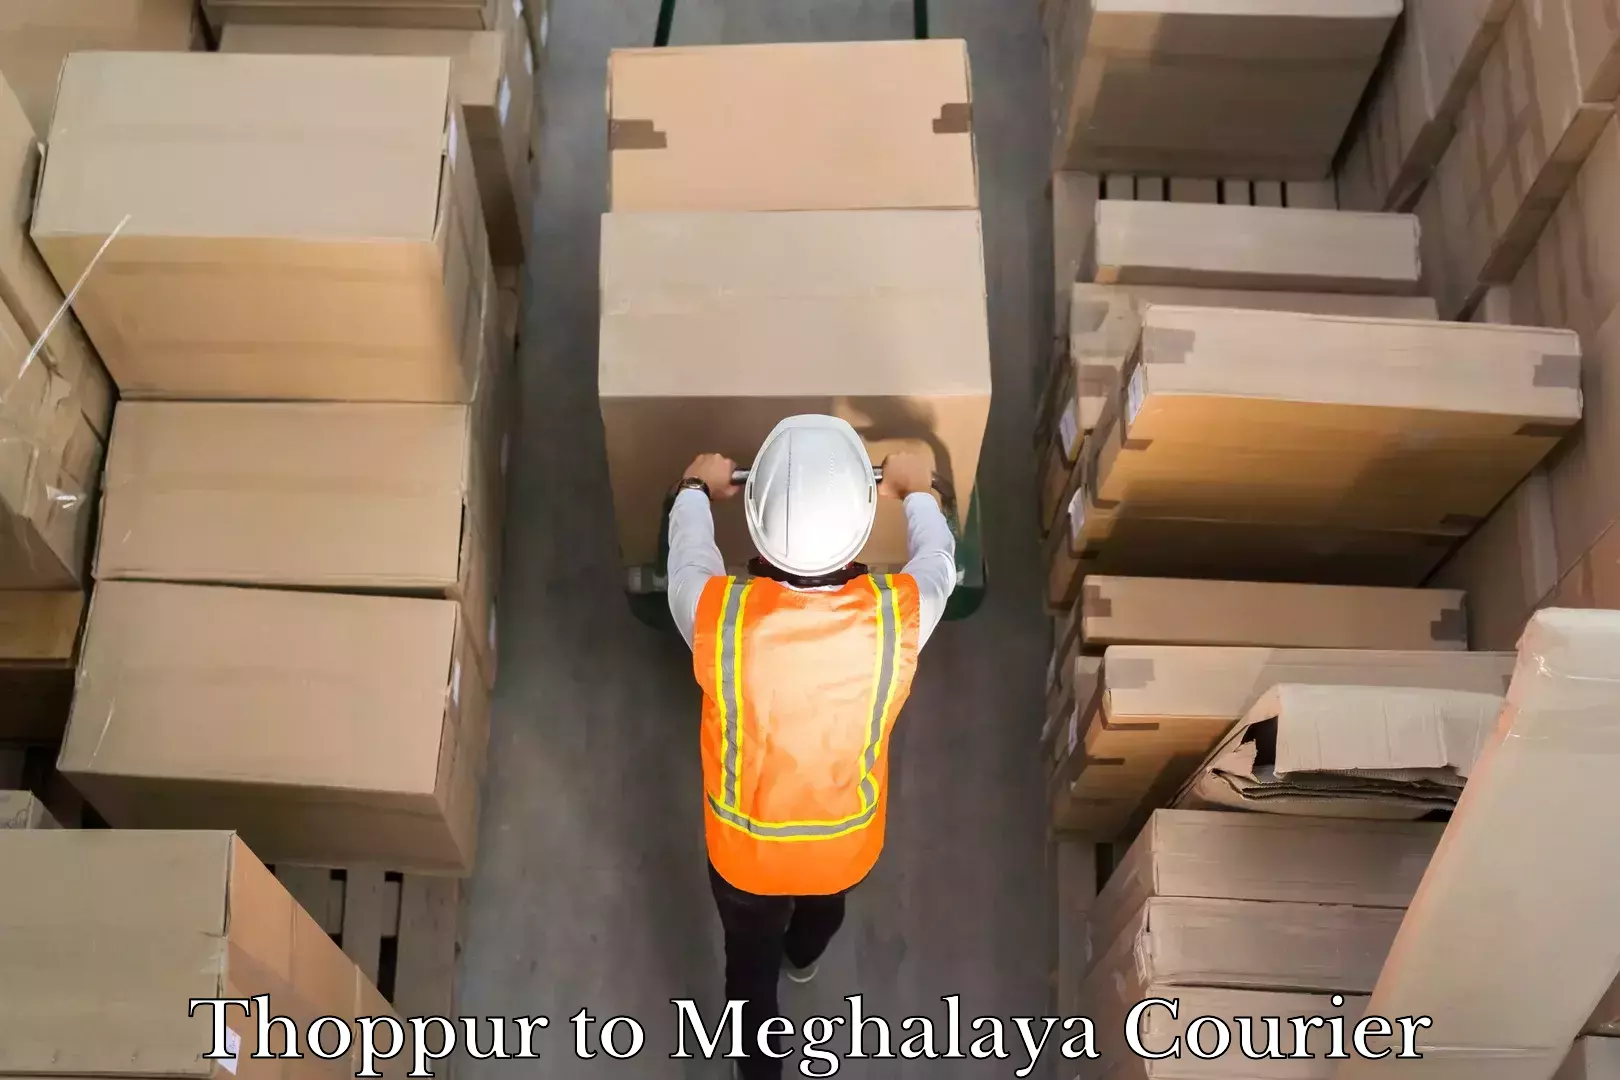 Quick dispatch service Thoppur to Meghalaya